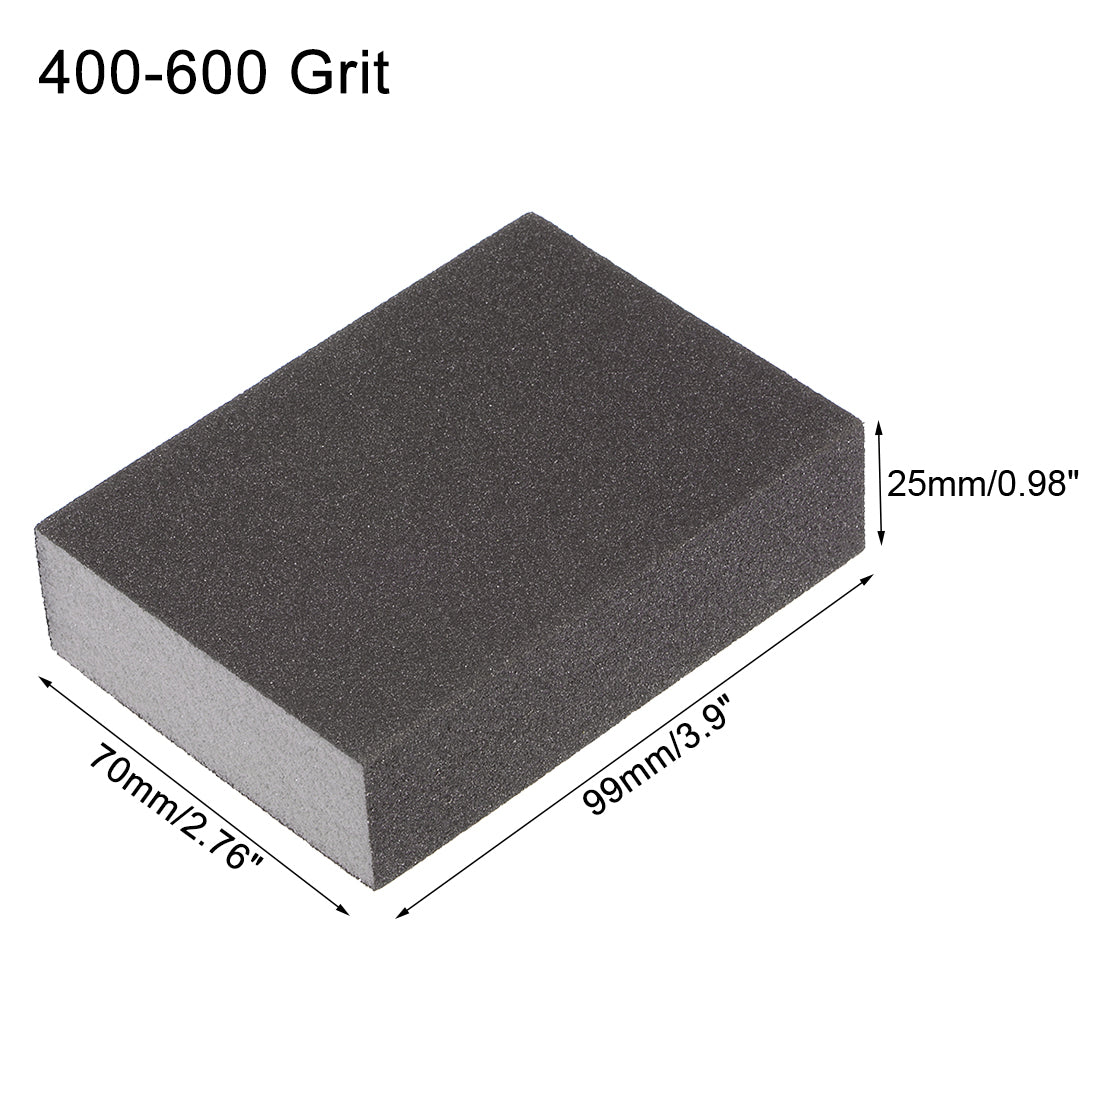 uxcell Uxcell Sanding Sponge Block, 200 Grit, 99mm x 70mm x 25mm